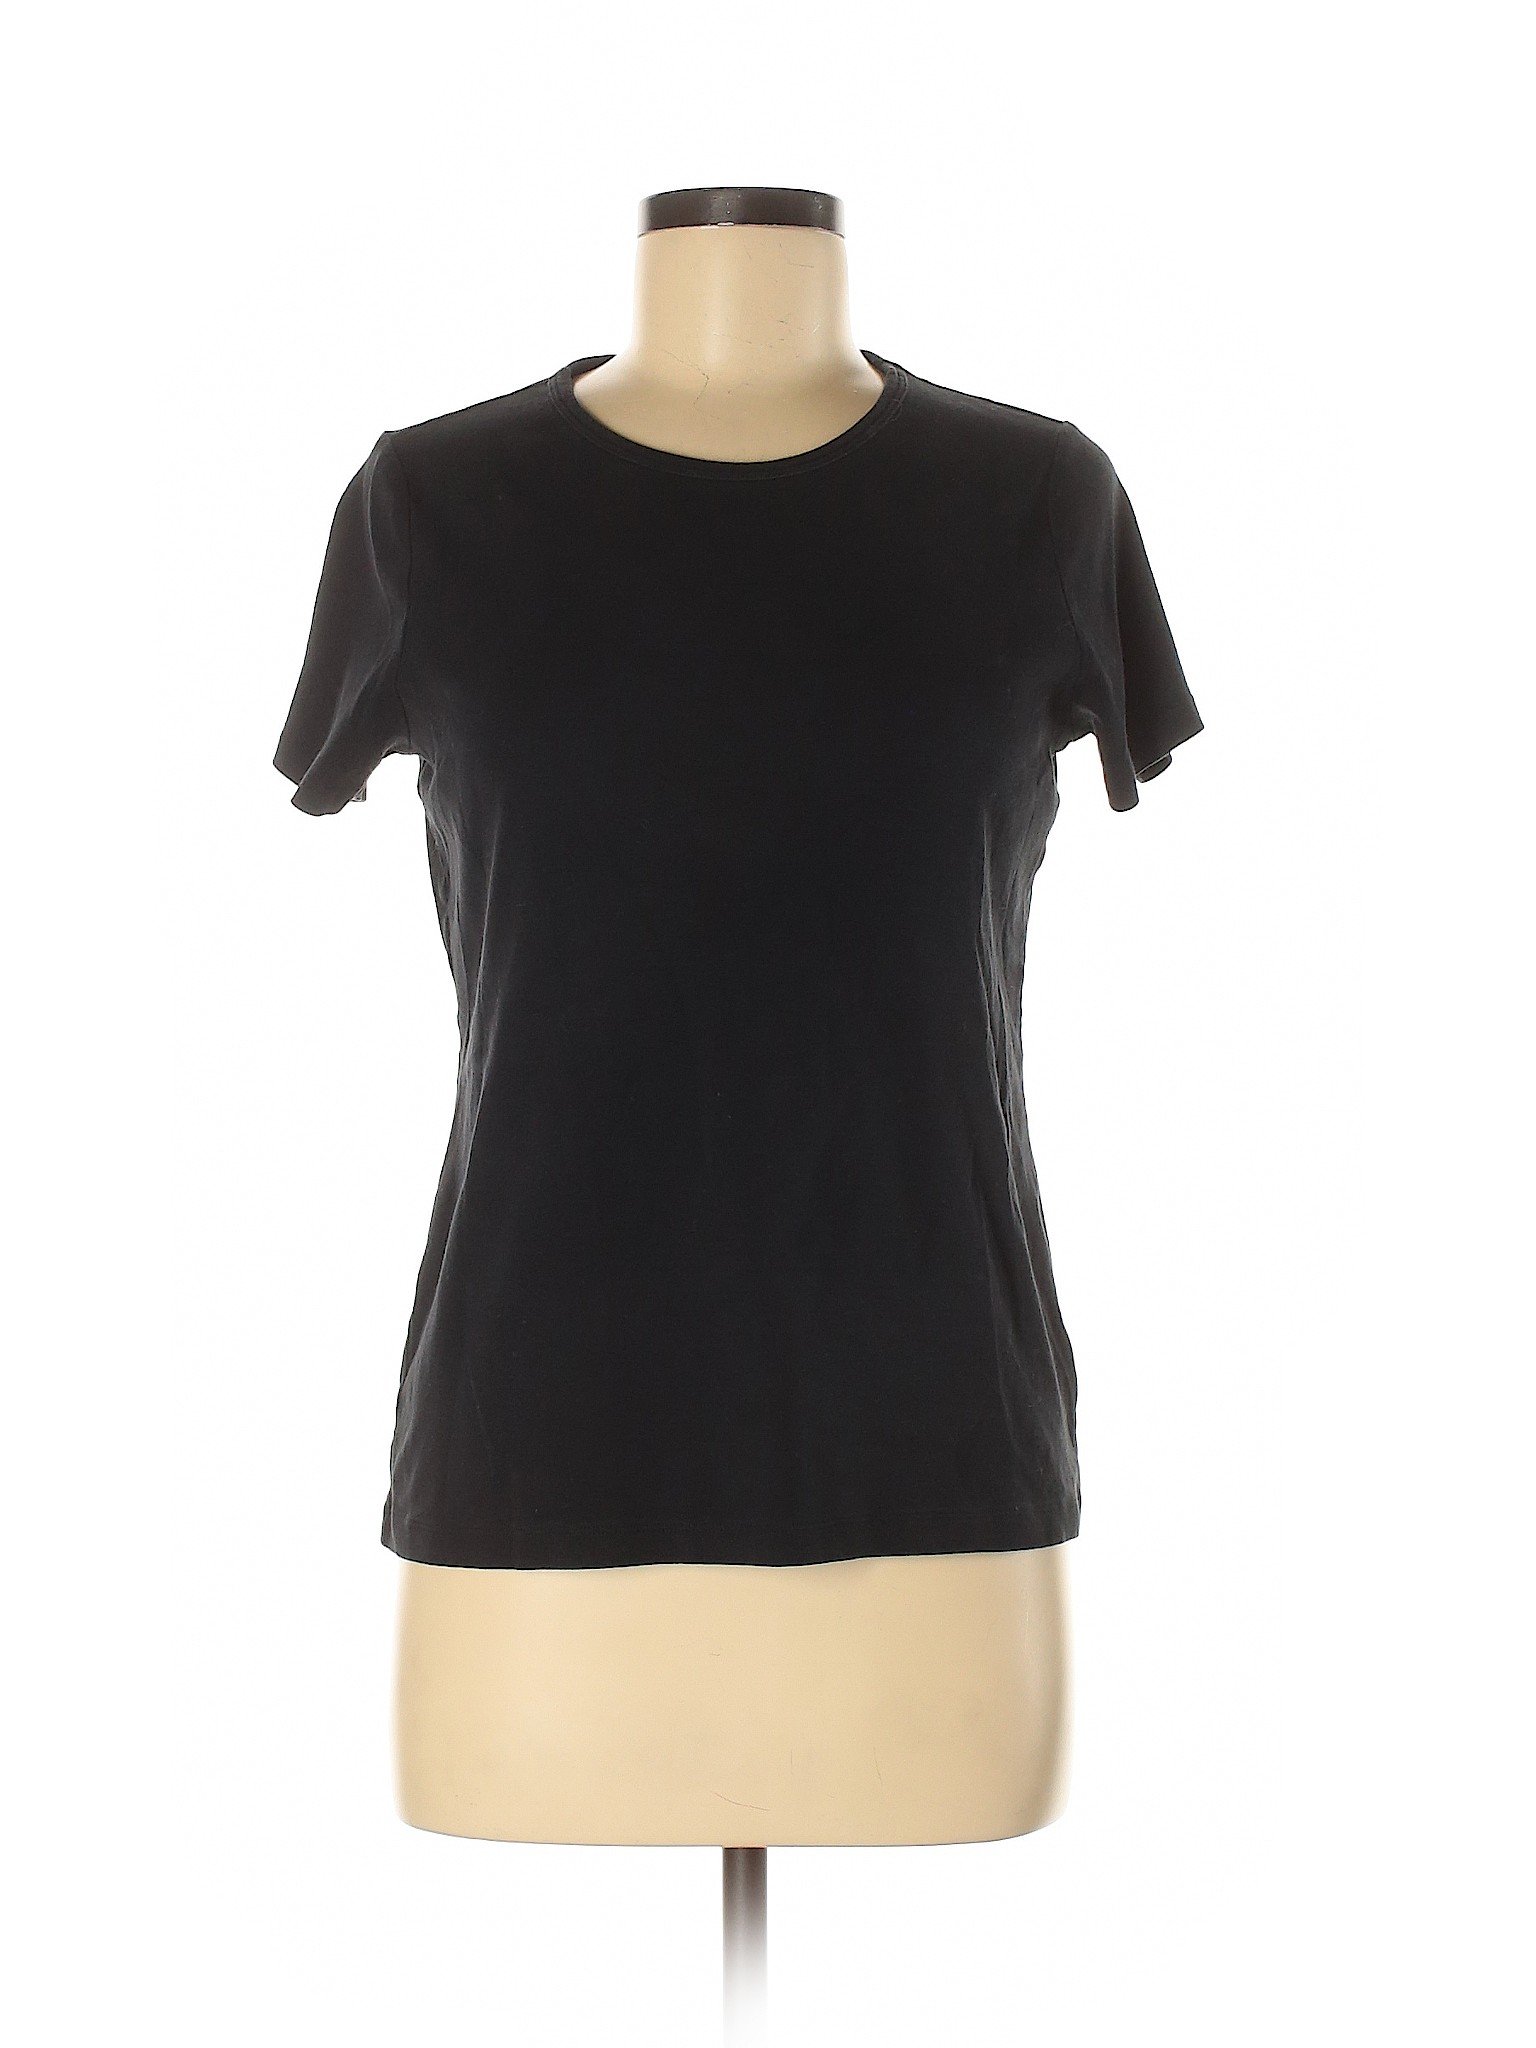 Lands' End Women Black Short Sleeve T-Shirt M | eBay